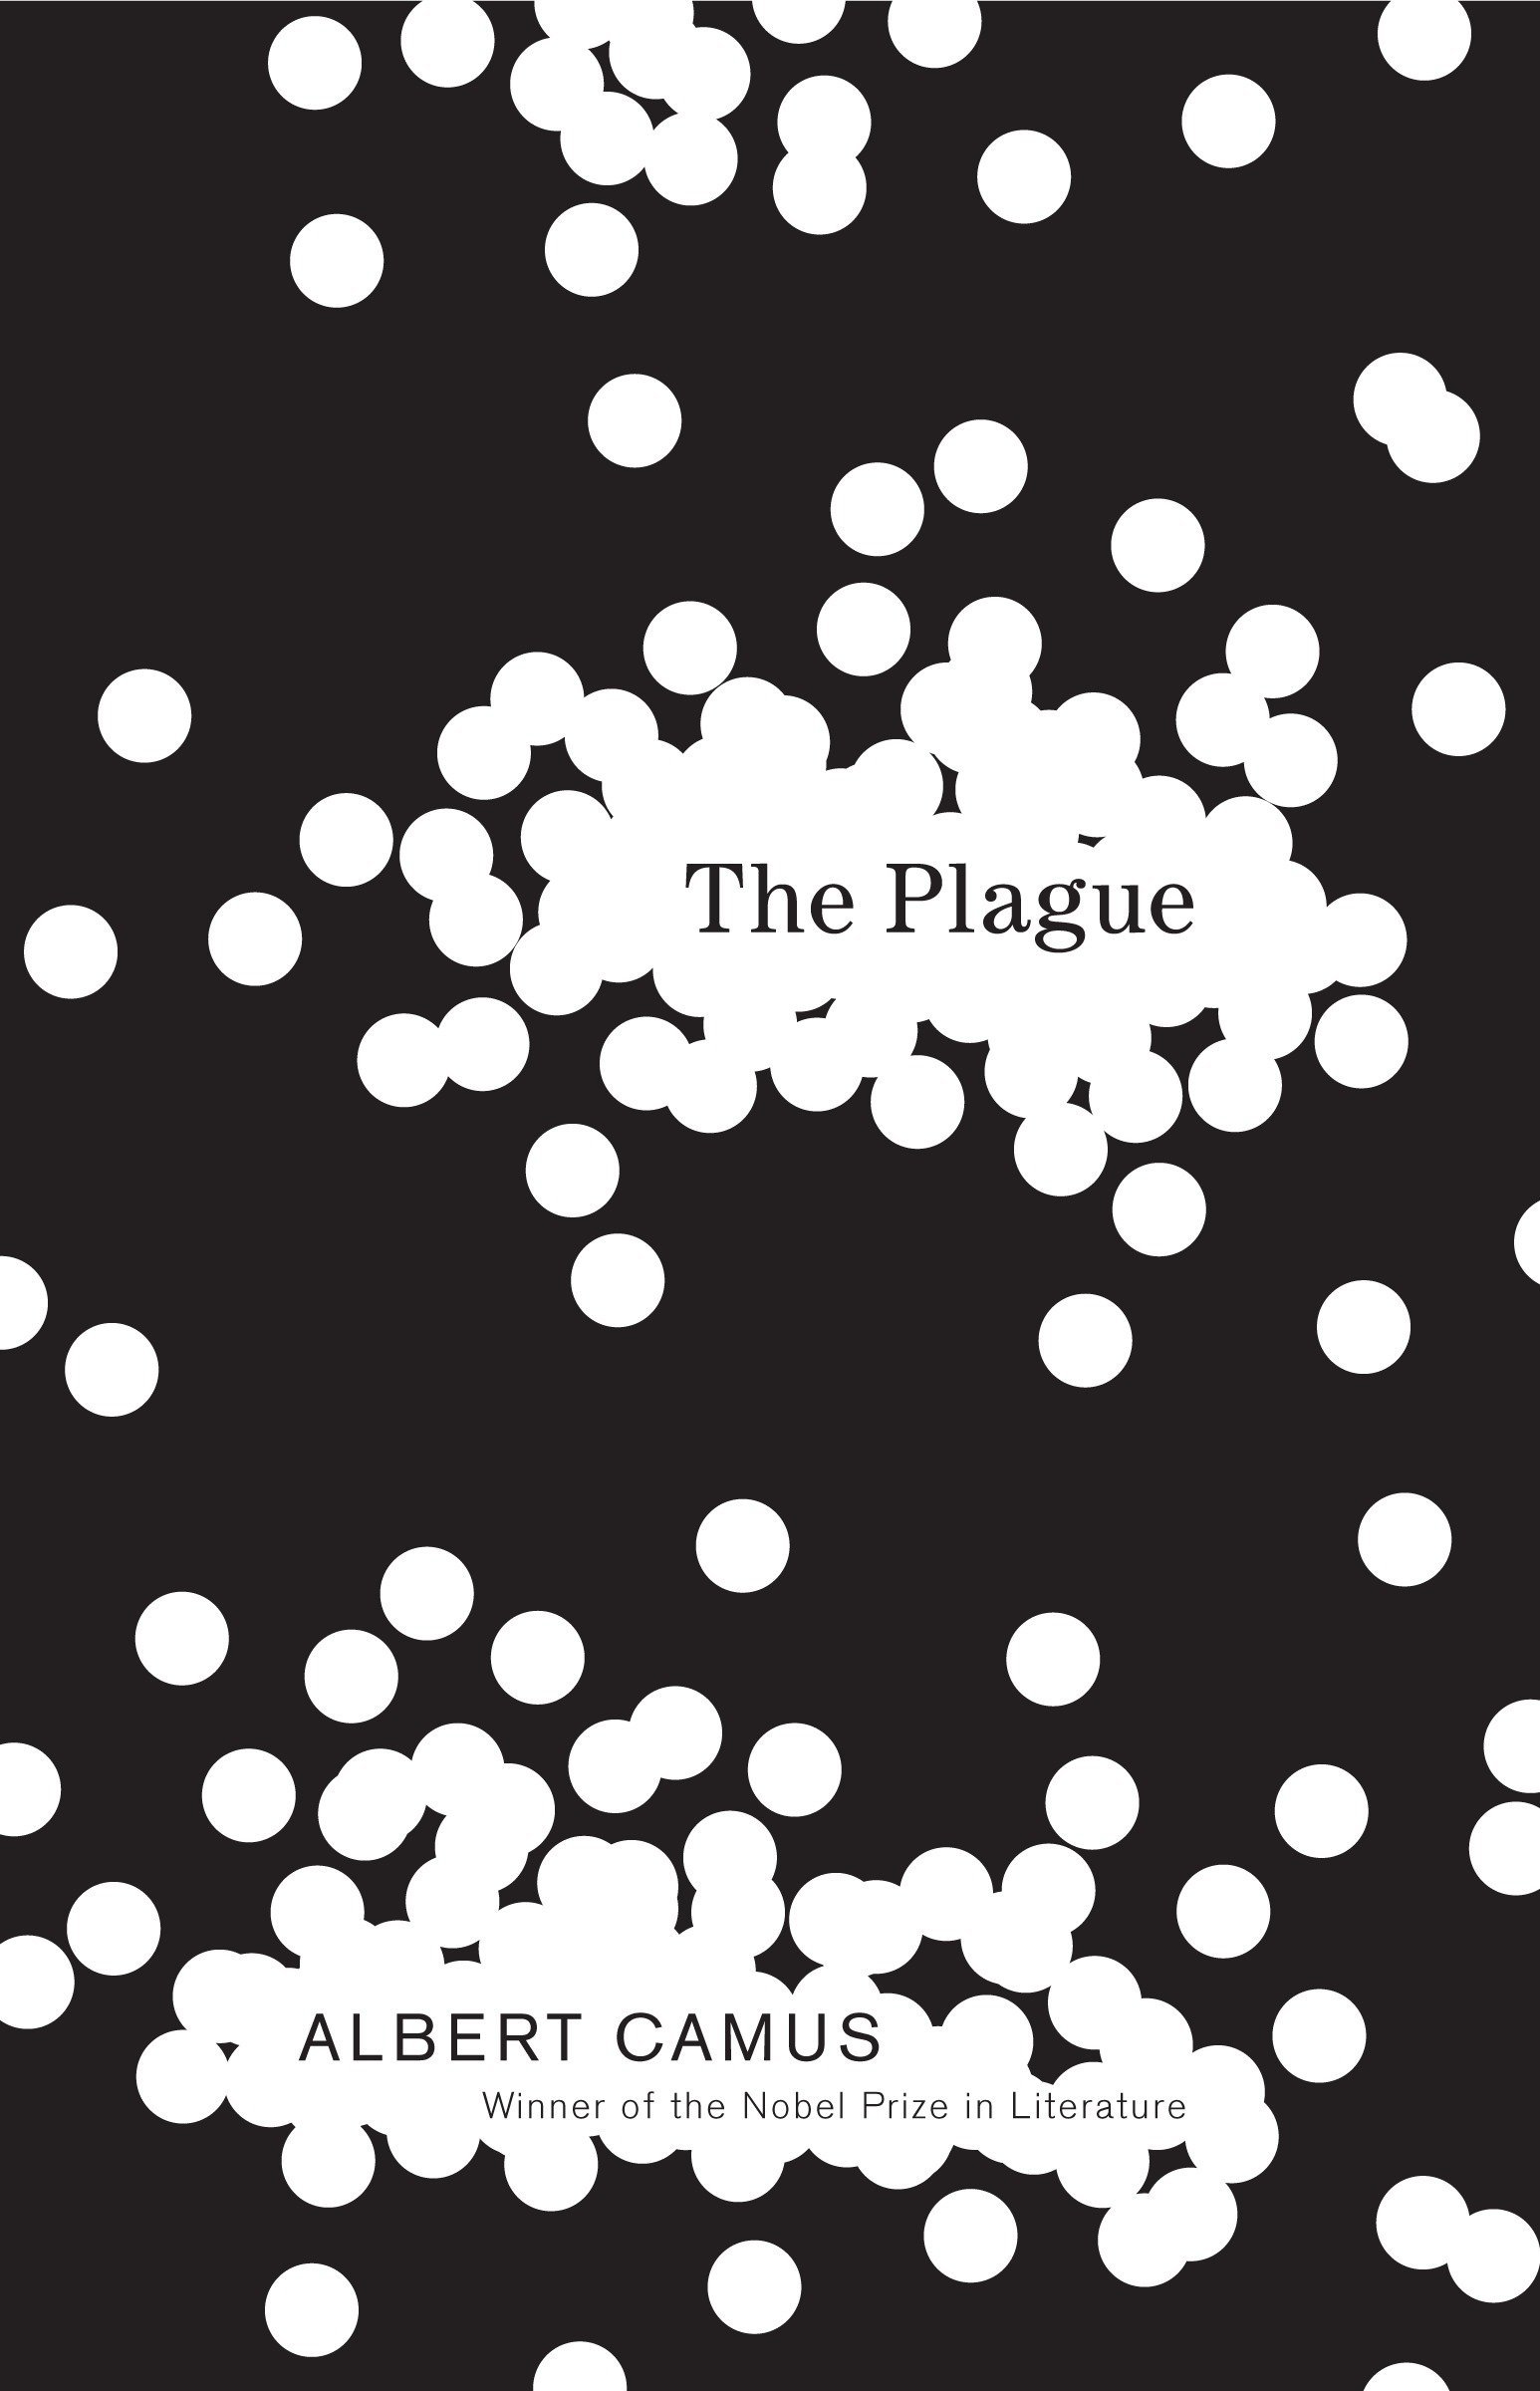 Thomas Merton: Albert Camus' The plague (1968, Seabury Press)